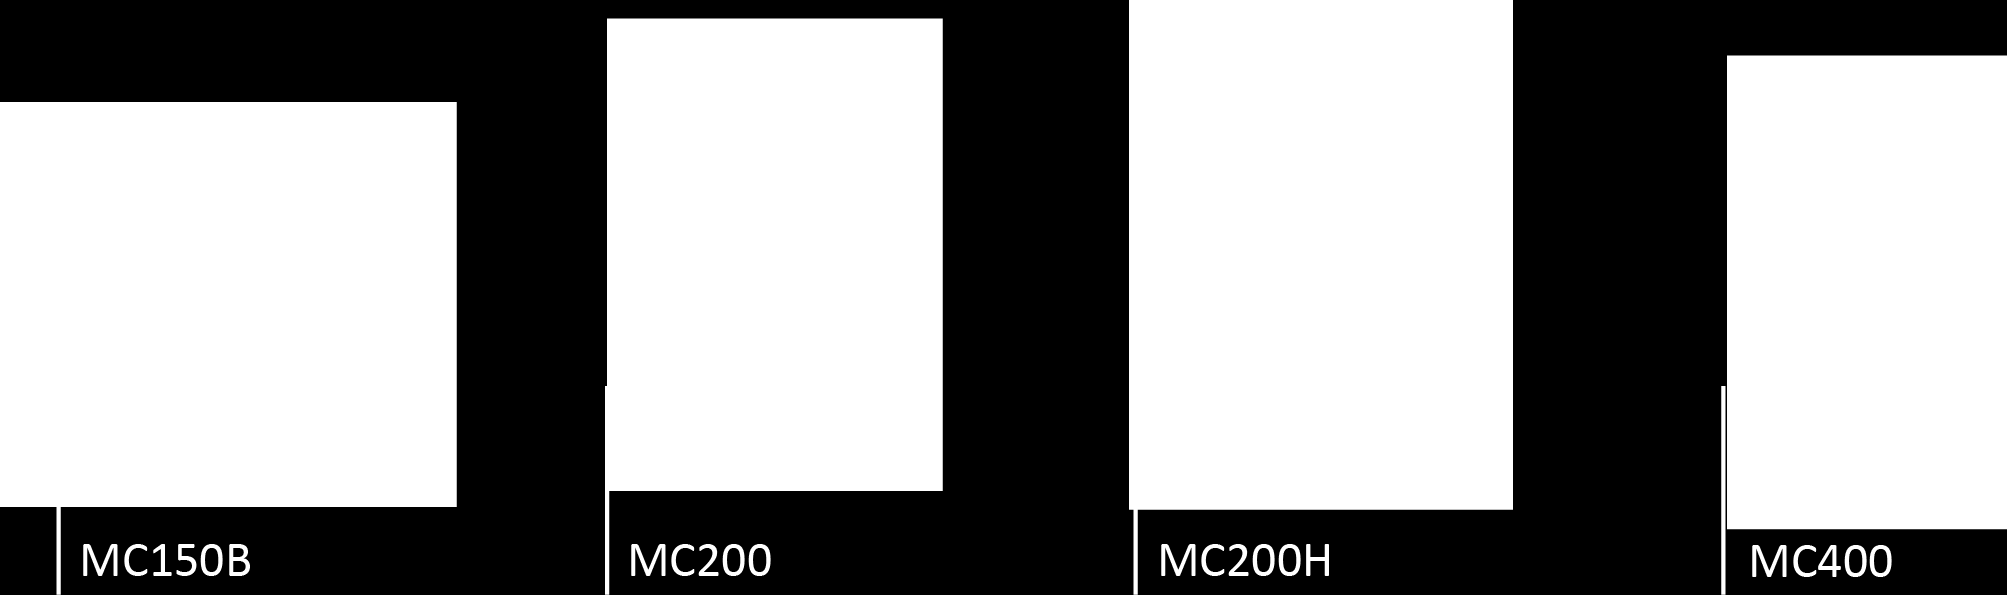 7.1. Capacidad de curvado MC150B MC200 MC200H MC400 Medidas Radio min.